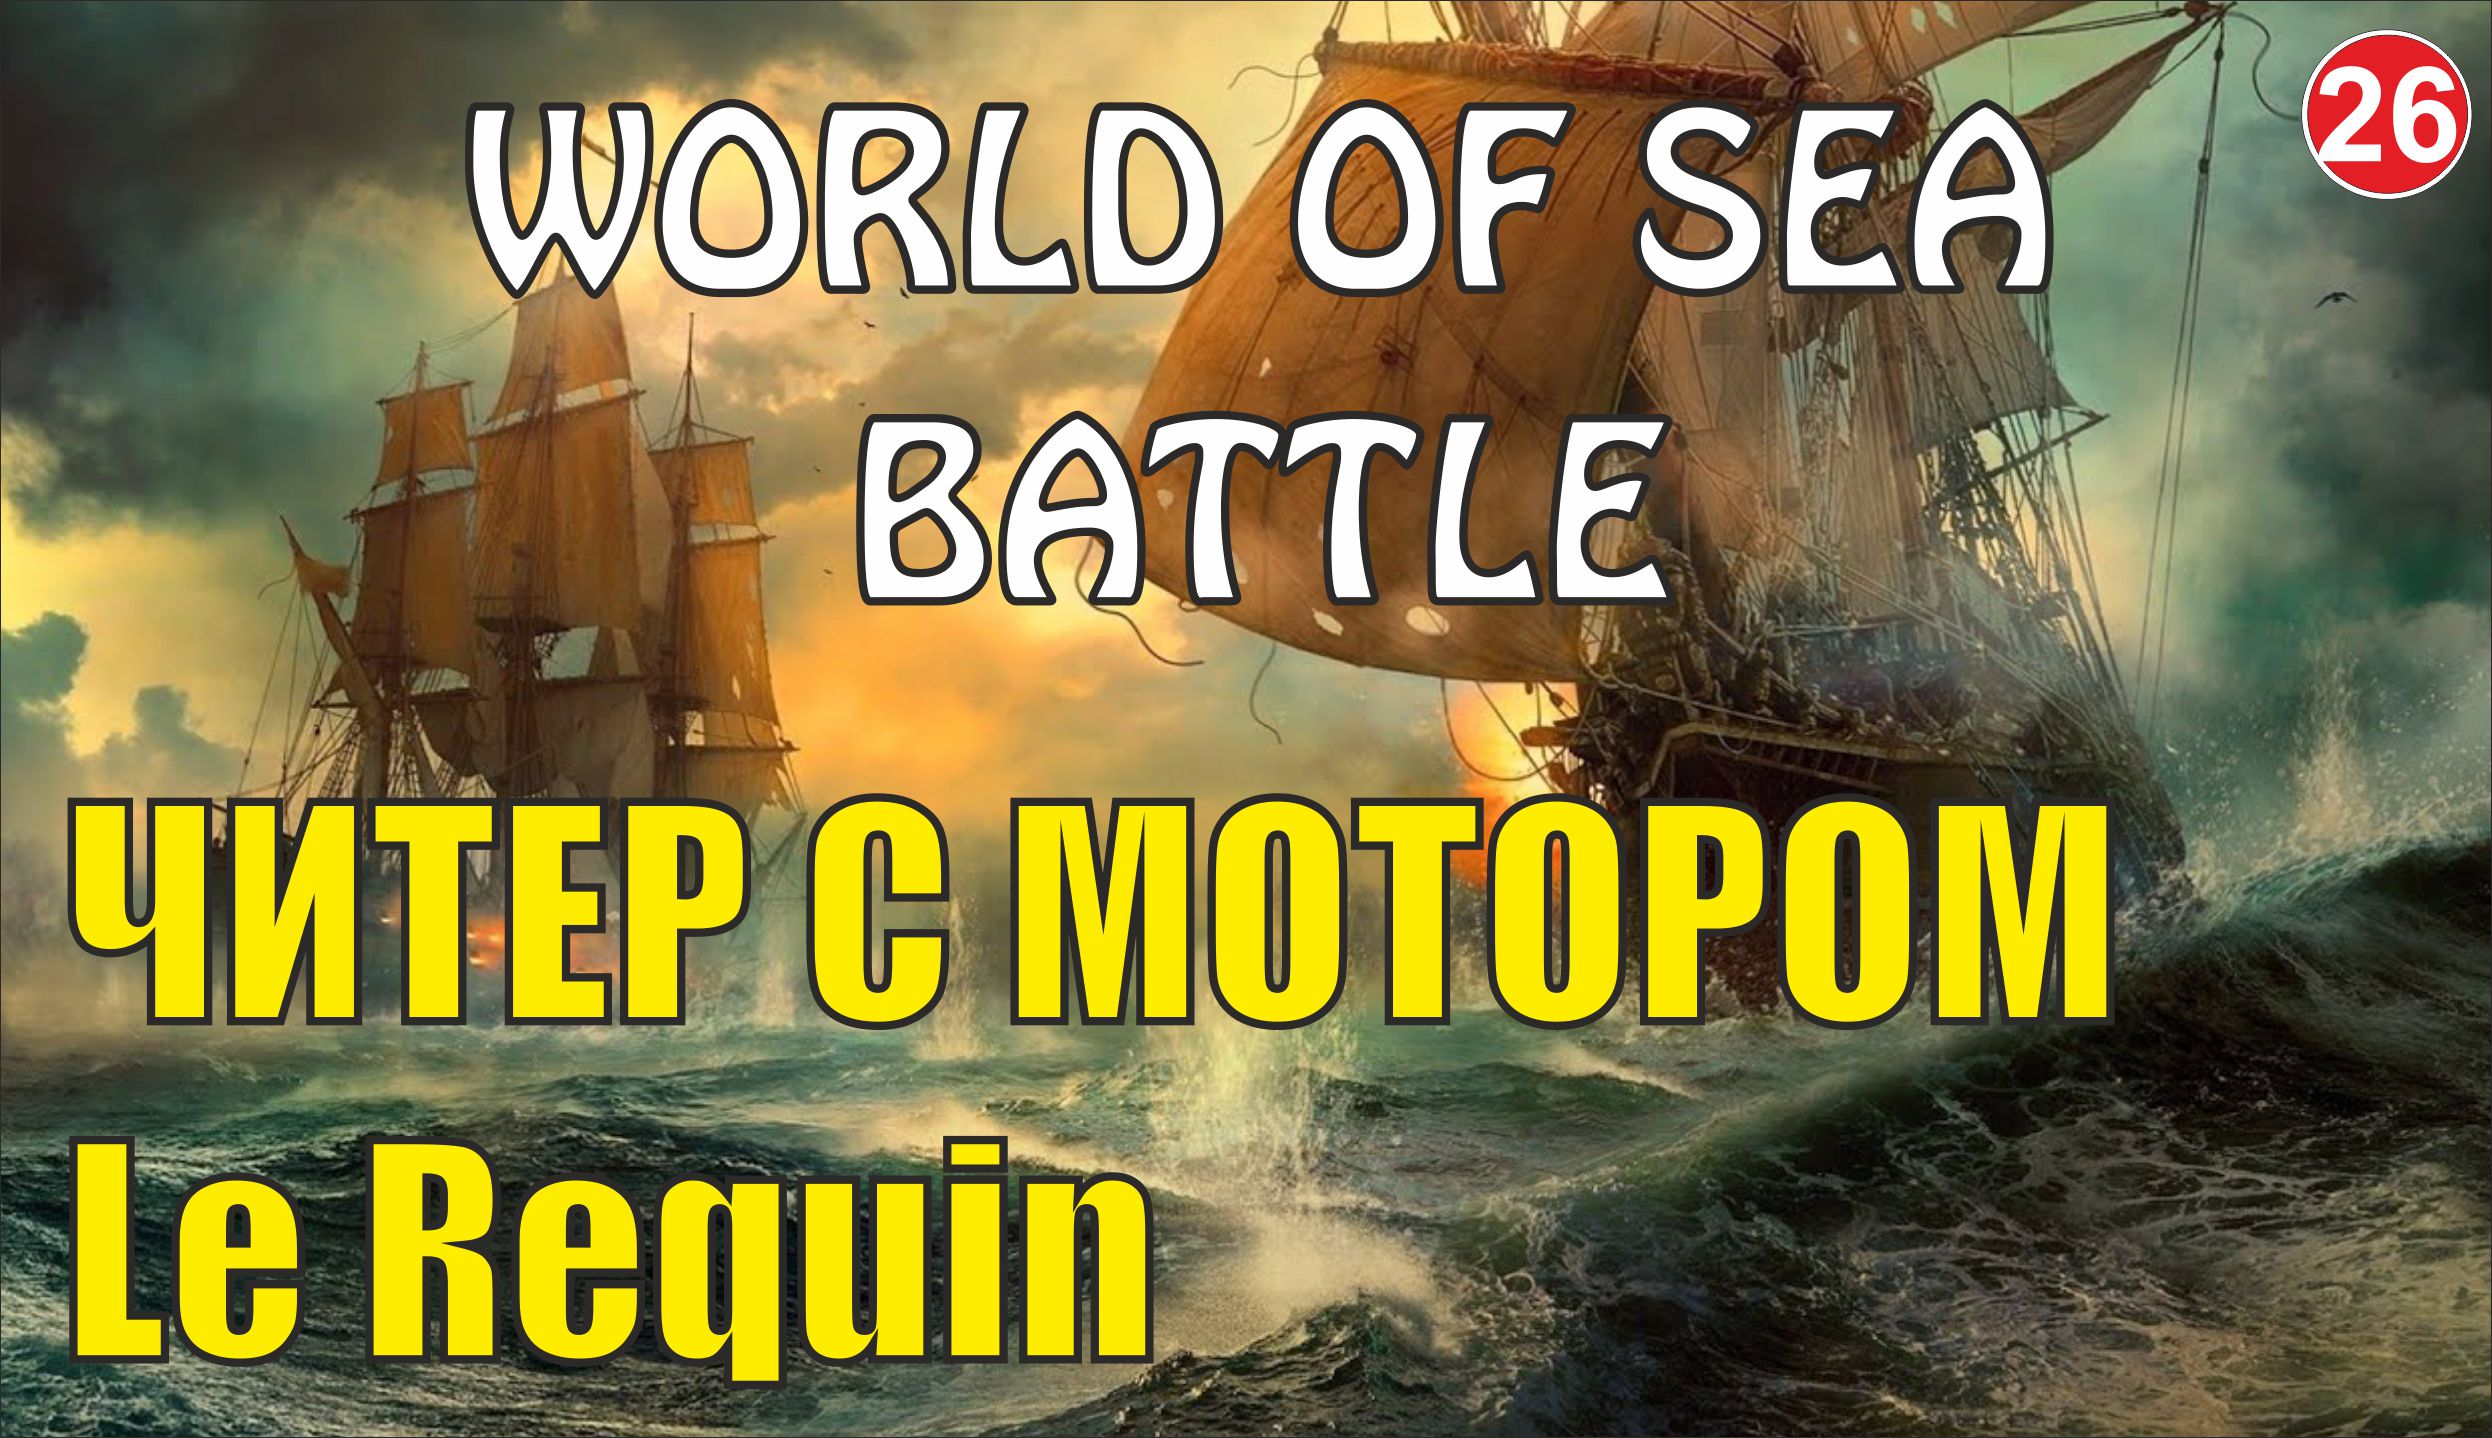 World of Sea Battle - Читер с мотором Le Requin